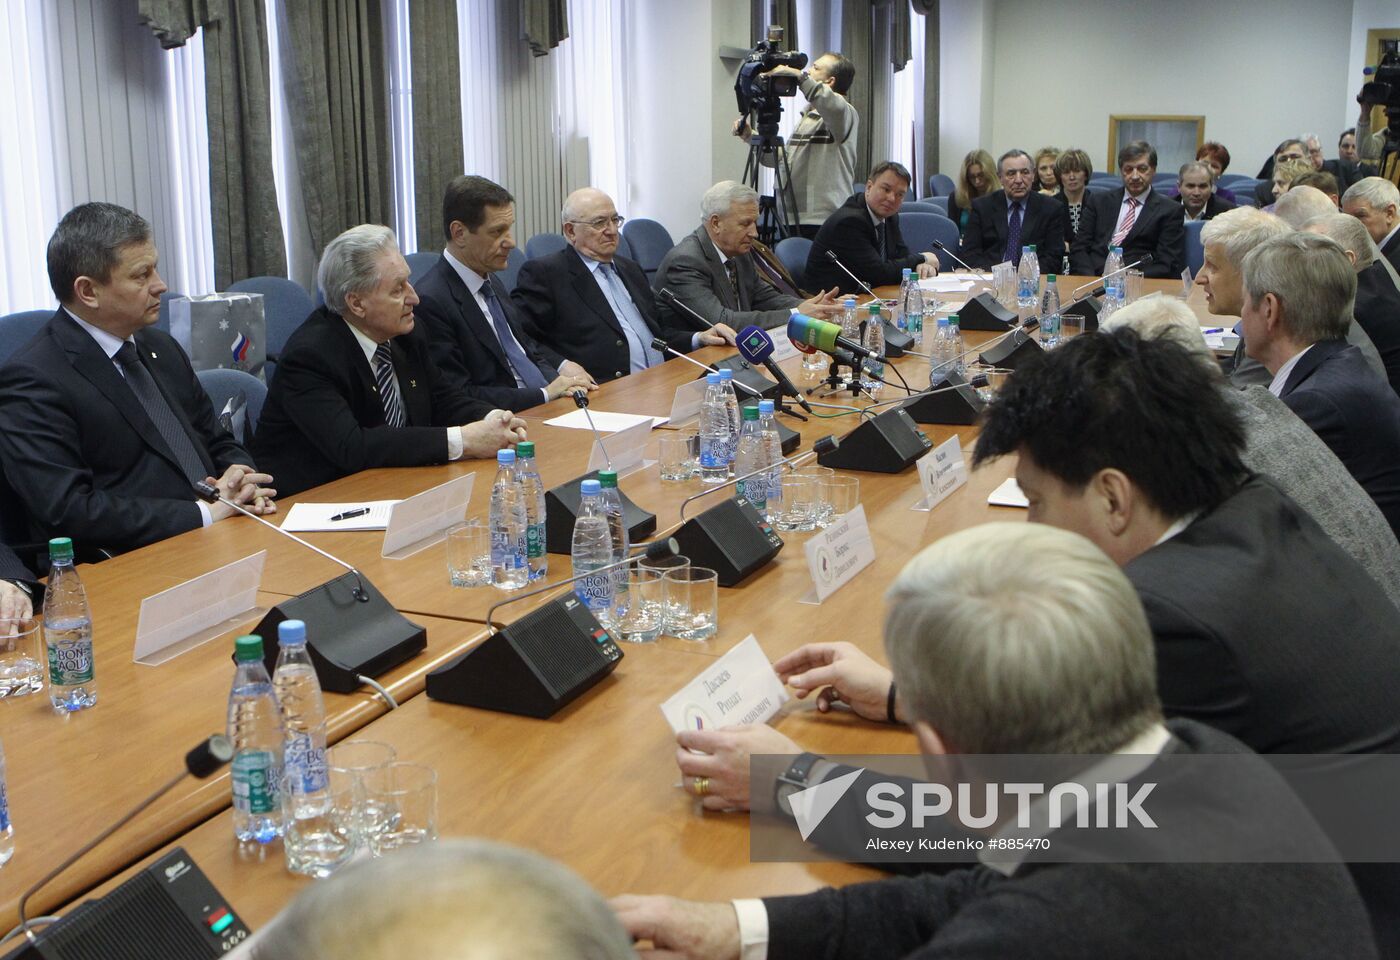 Meeting of ROC President Alexander Zhukov with football veterans